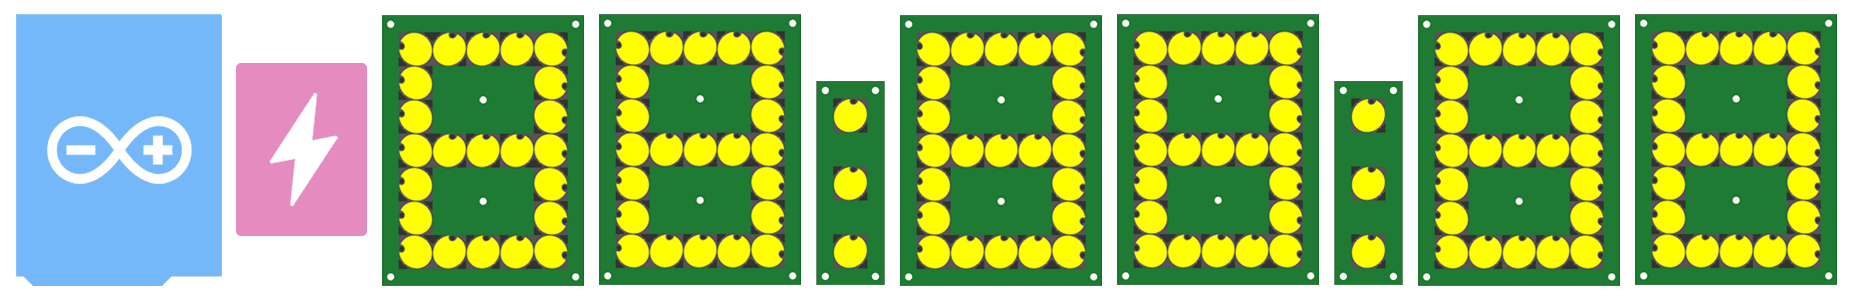 arduino-6x7-seg-2x3dots-flip-disc-psps-module.png